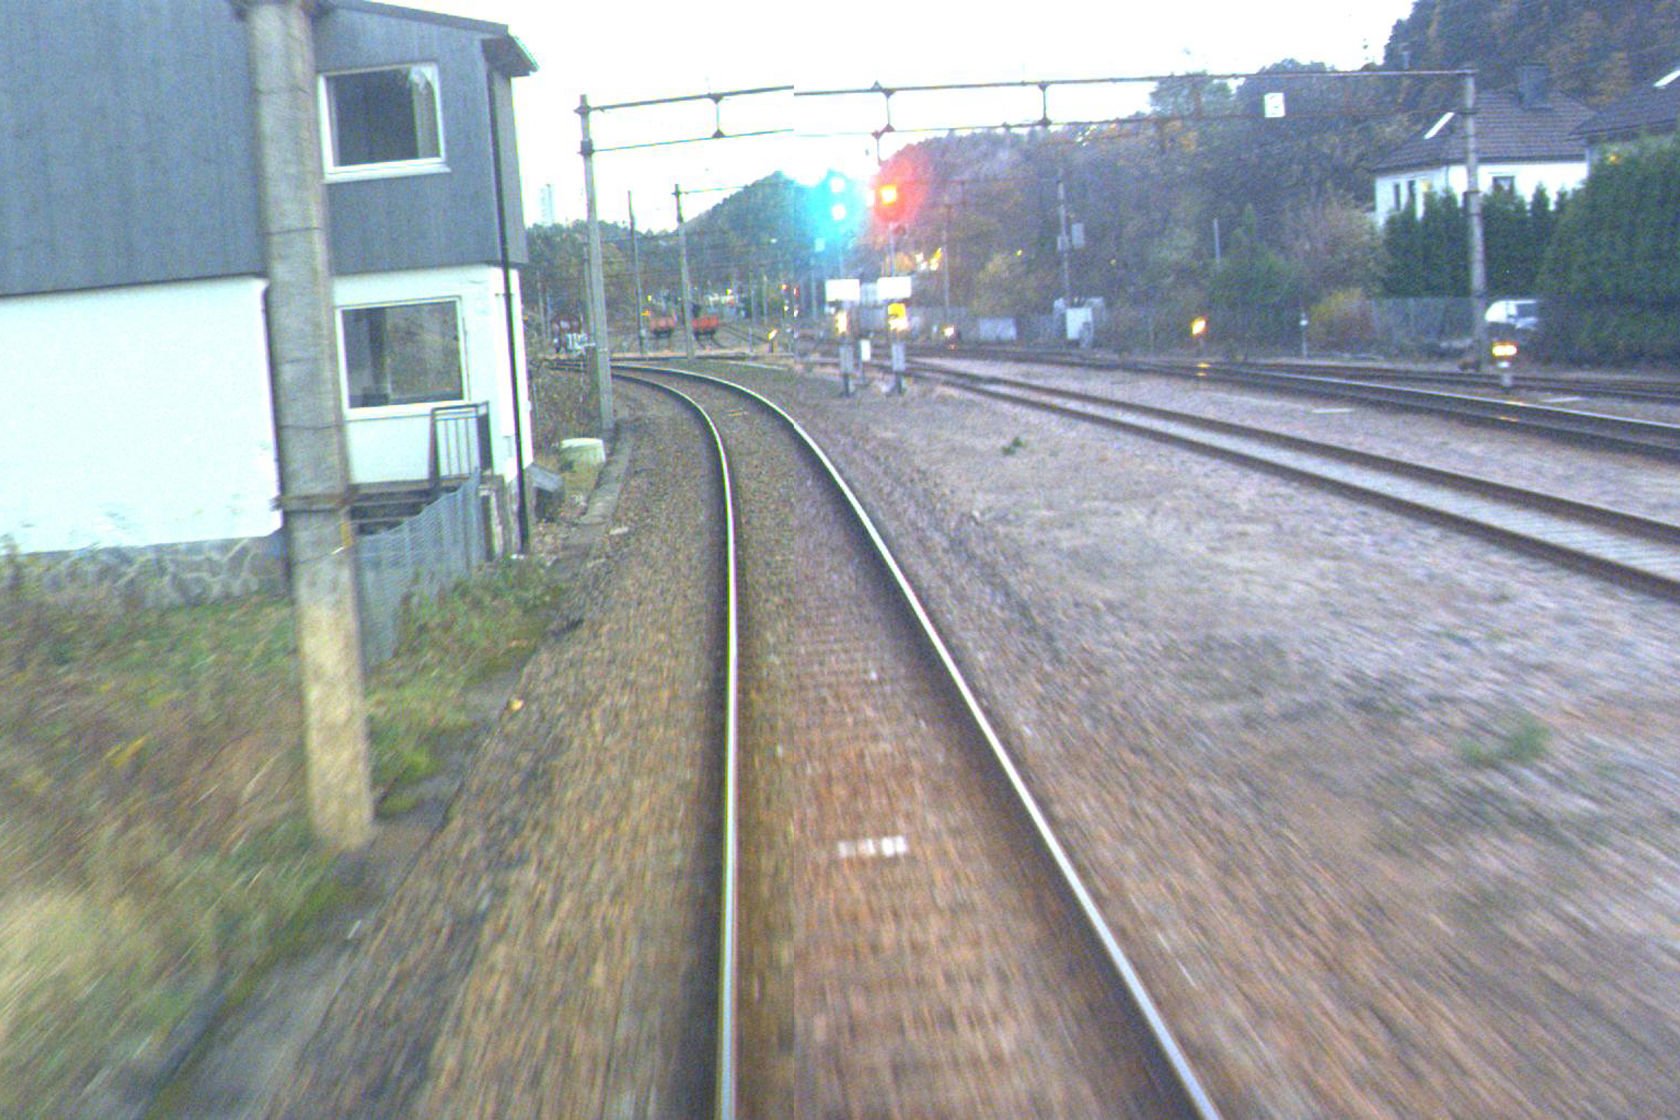 Tracks and station building at Dalane station